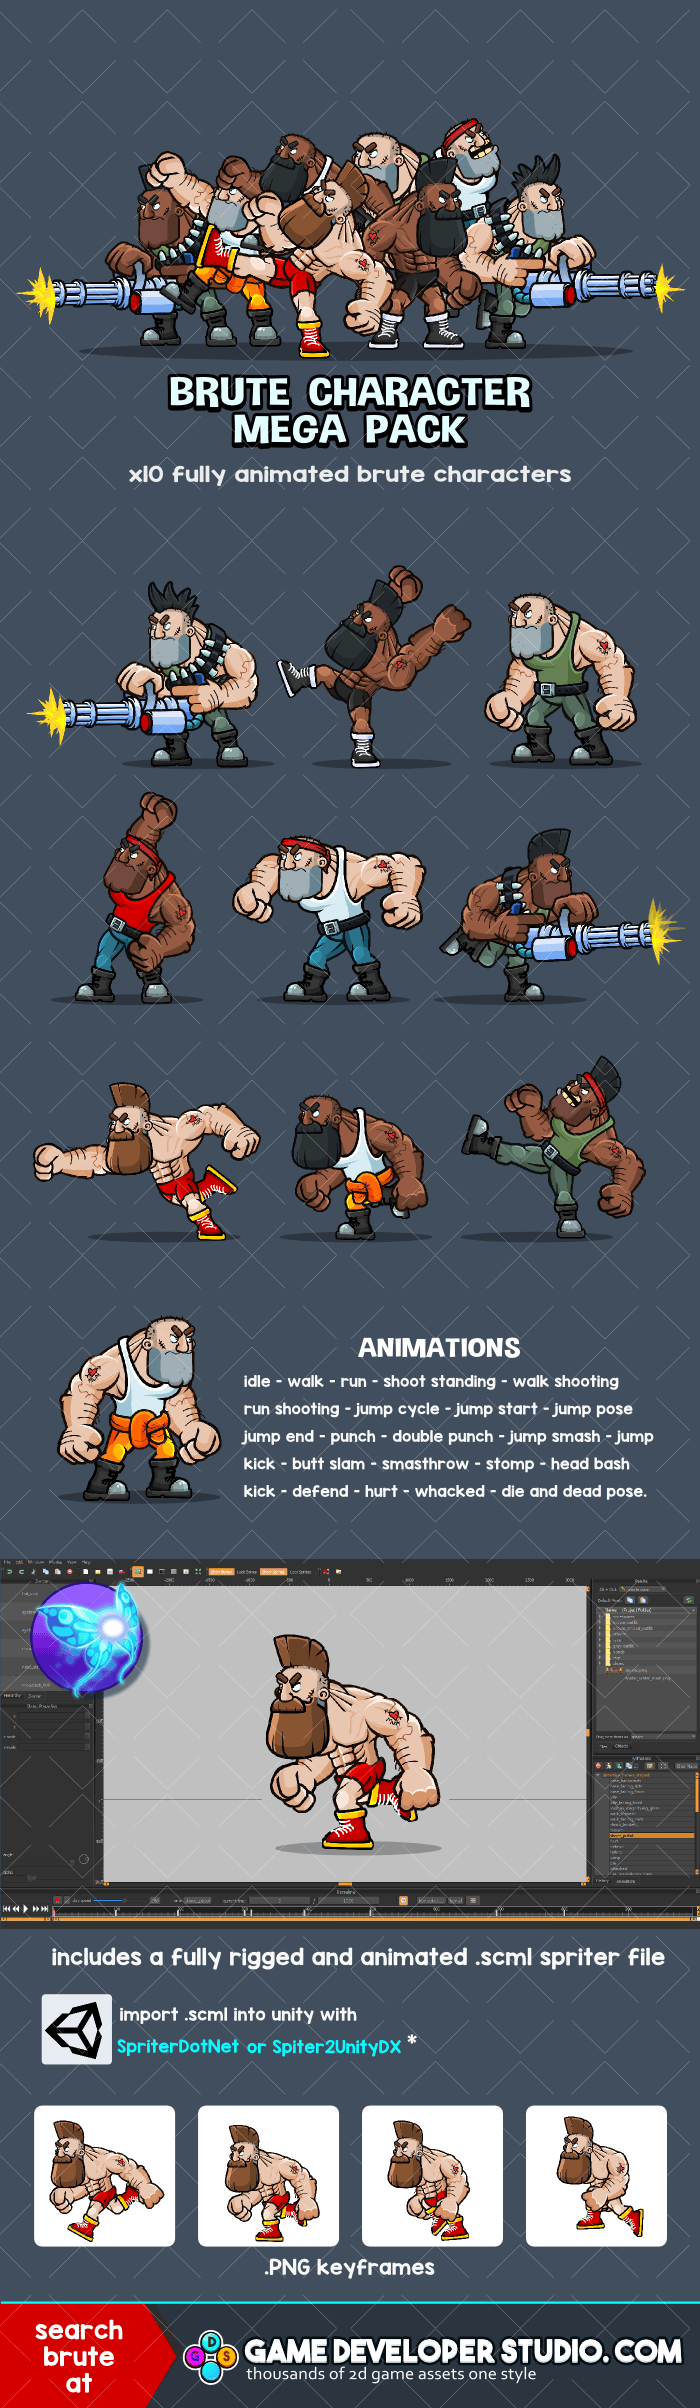 Animated brute character mega pack